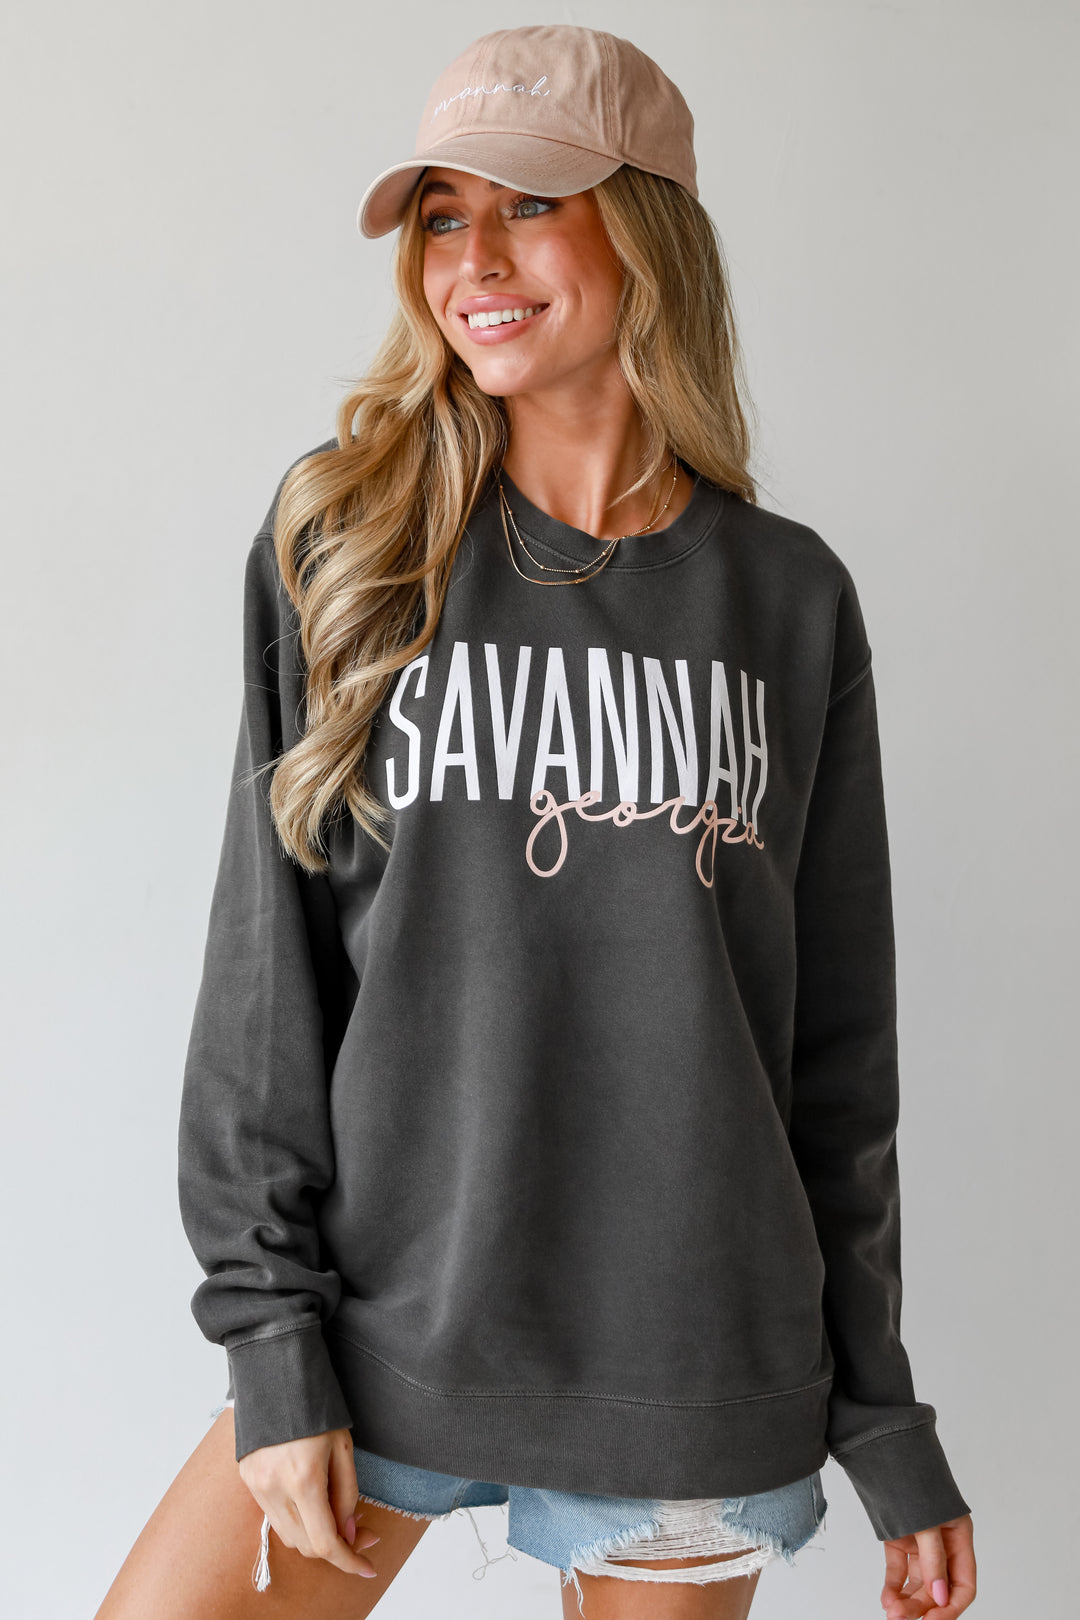 Charcoal Savannah Georgia Pullover. Savannah Sweatshirt. Oversized Comfy Sweatshirt